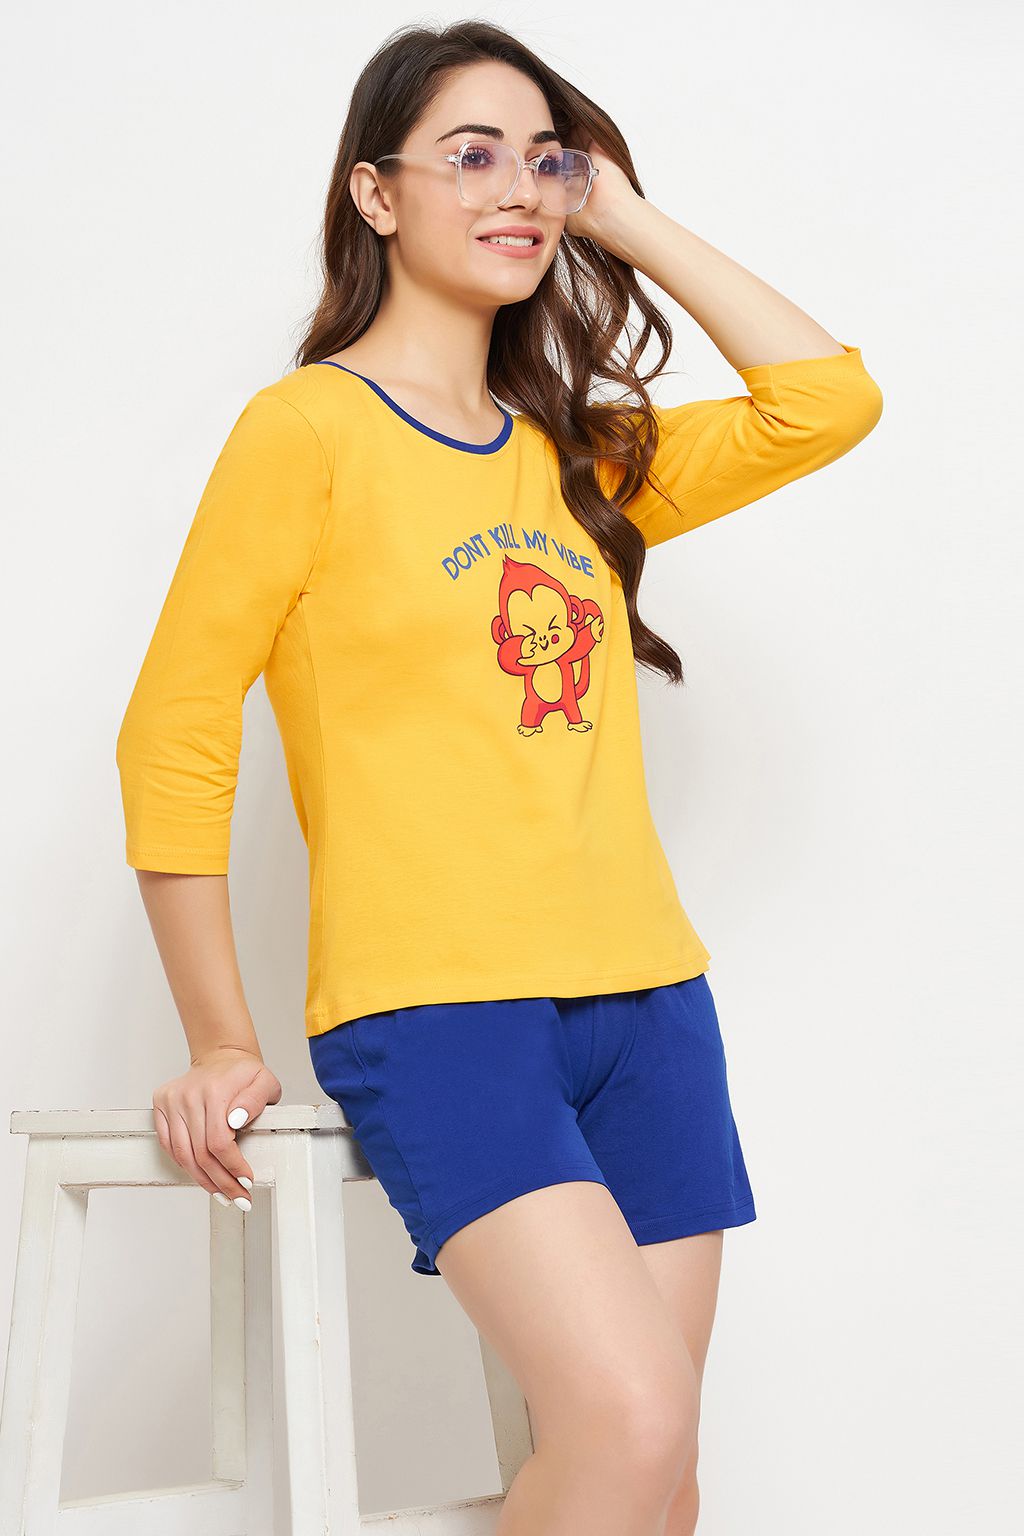     			Clovia Yellow Cotton Women's Nightwear Nightsuit Sets ( Pack of 2 )